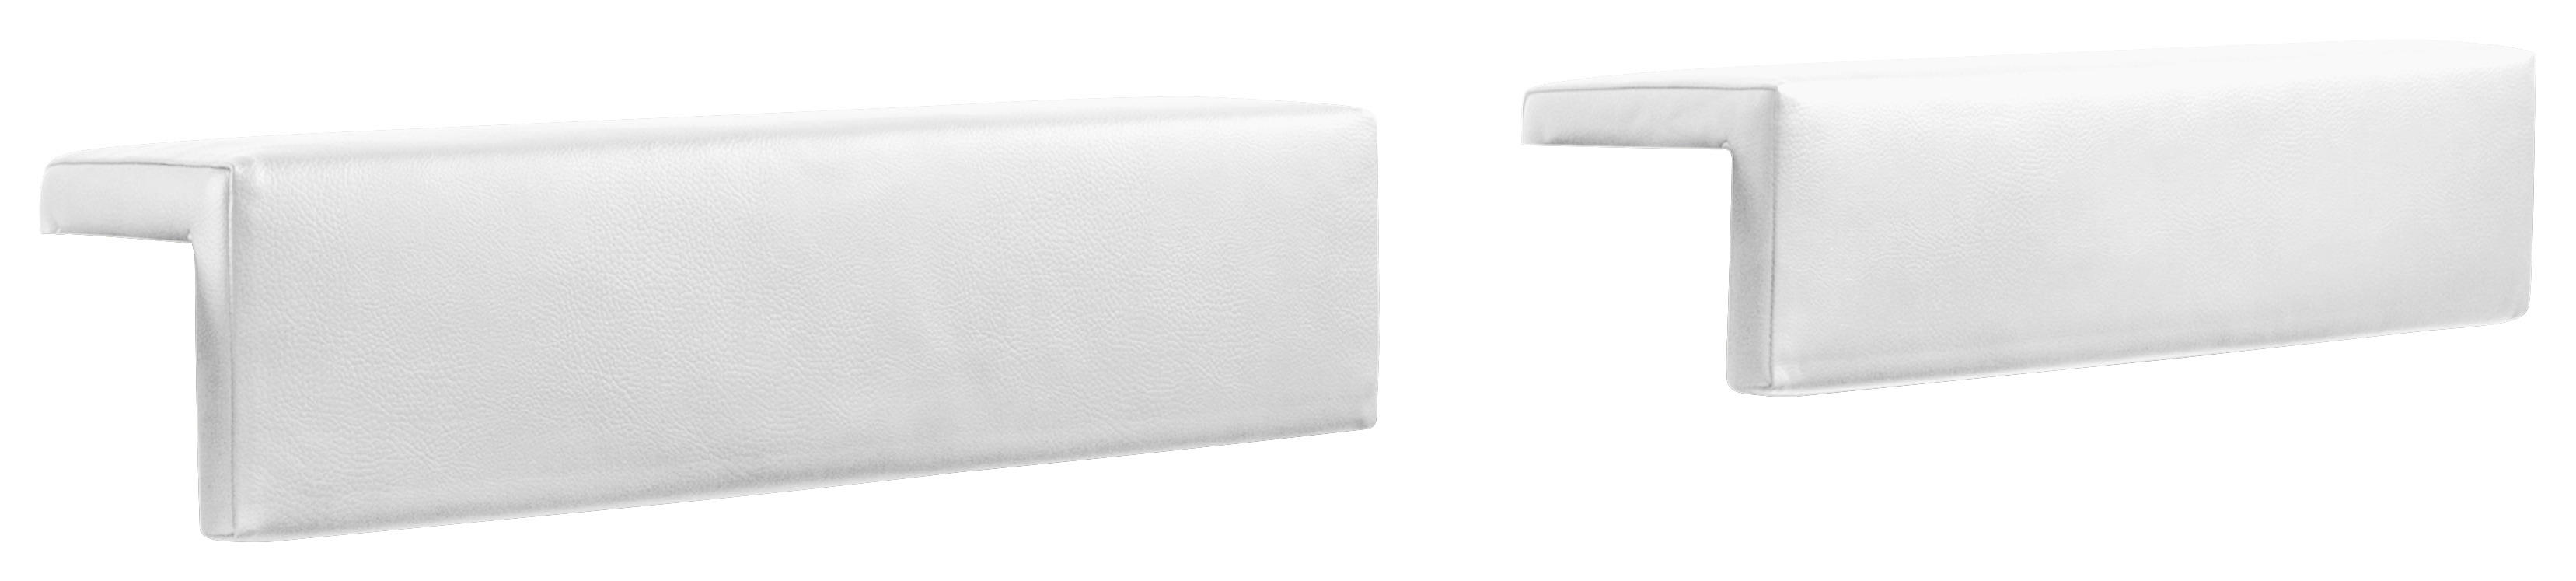 KOPFTEILPOLSTER 55/14/19 cm   - Weiß, Design, Textil (55/14/19cm) - Hasena